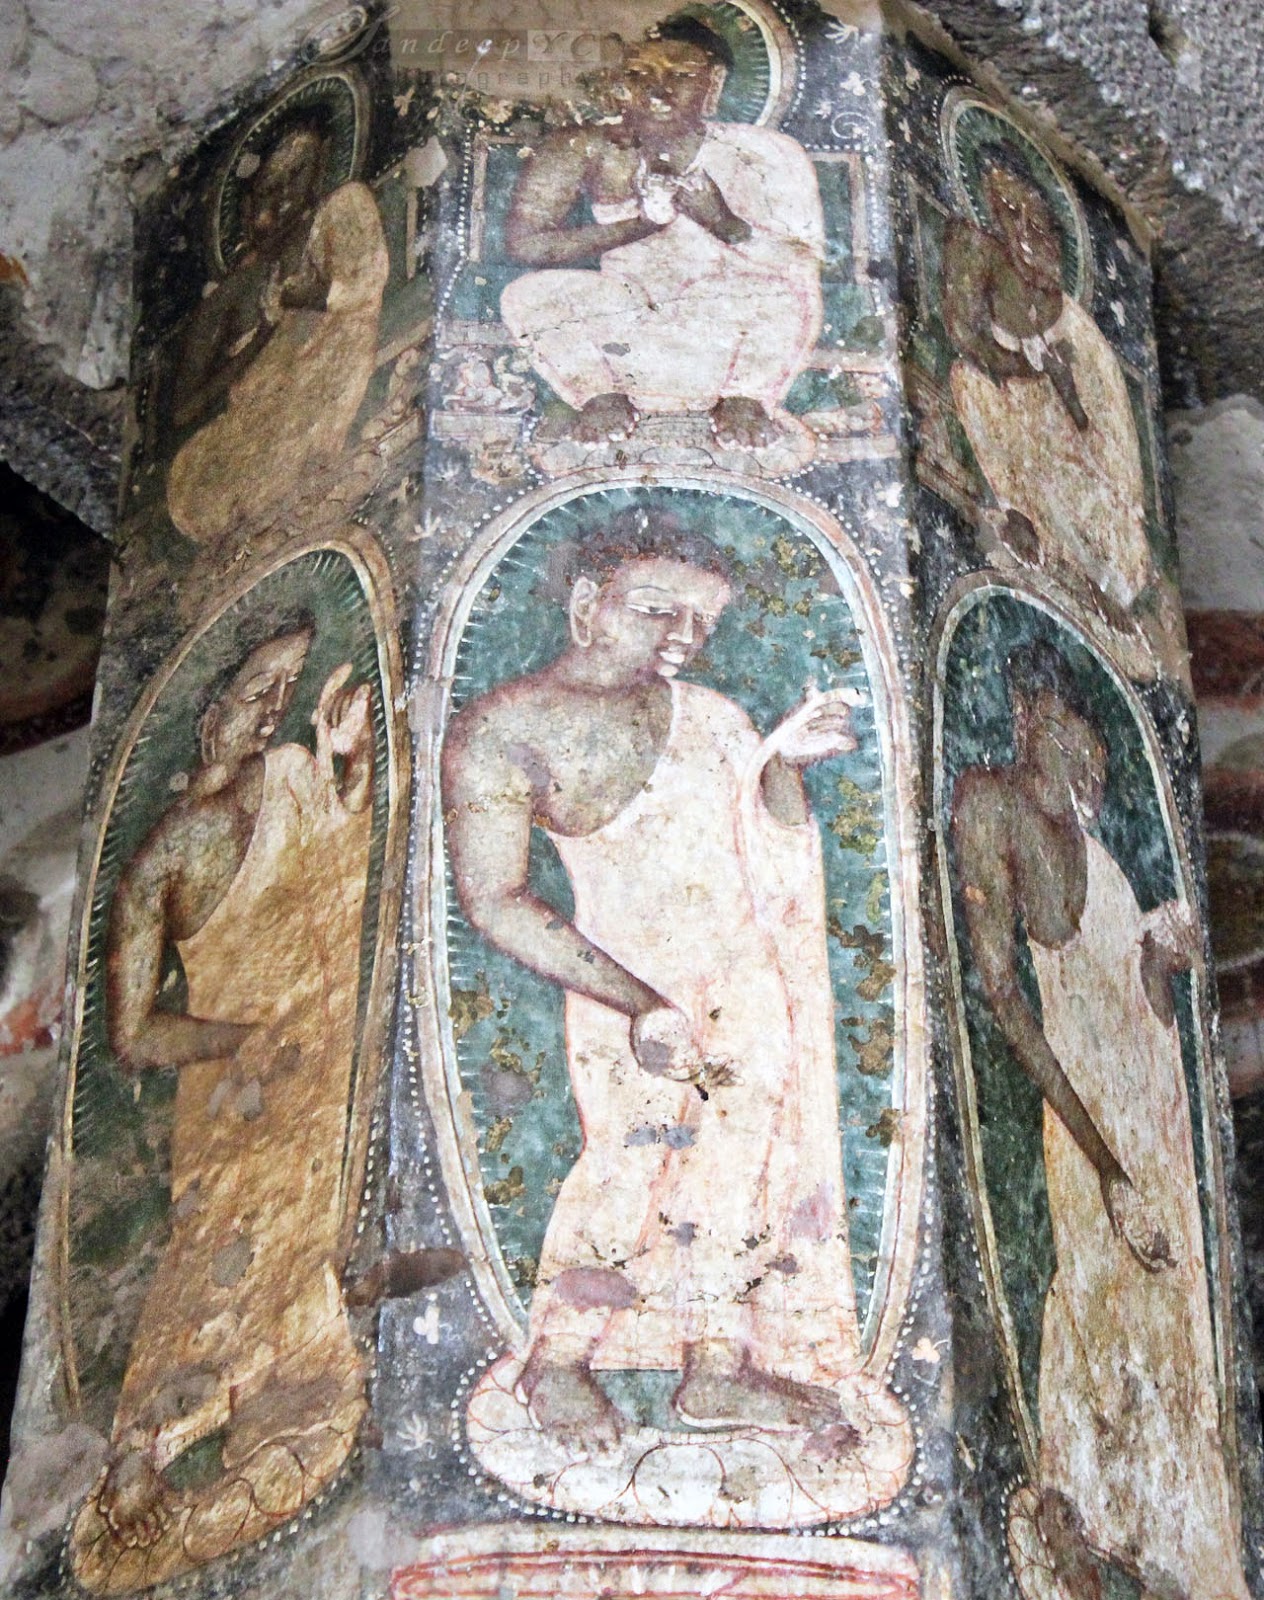 Buddhist images on the octagonal pillars